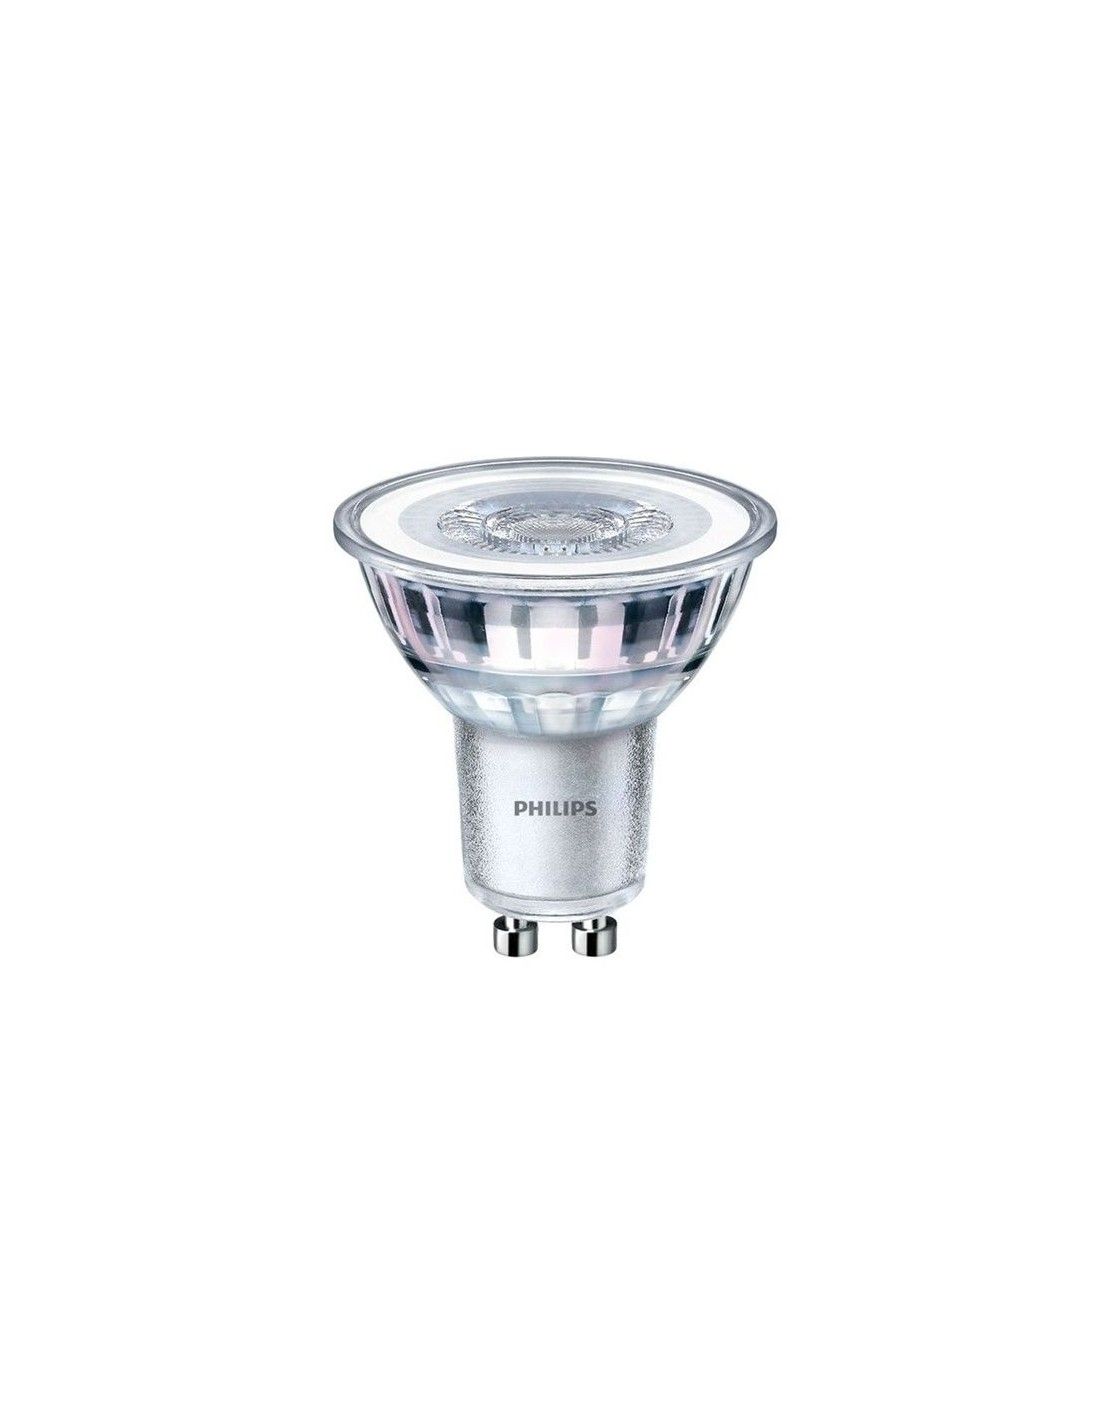 Bombilla LED GU10 5W 36º 390 lumens - Corepro LEDspot Philips